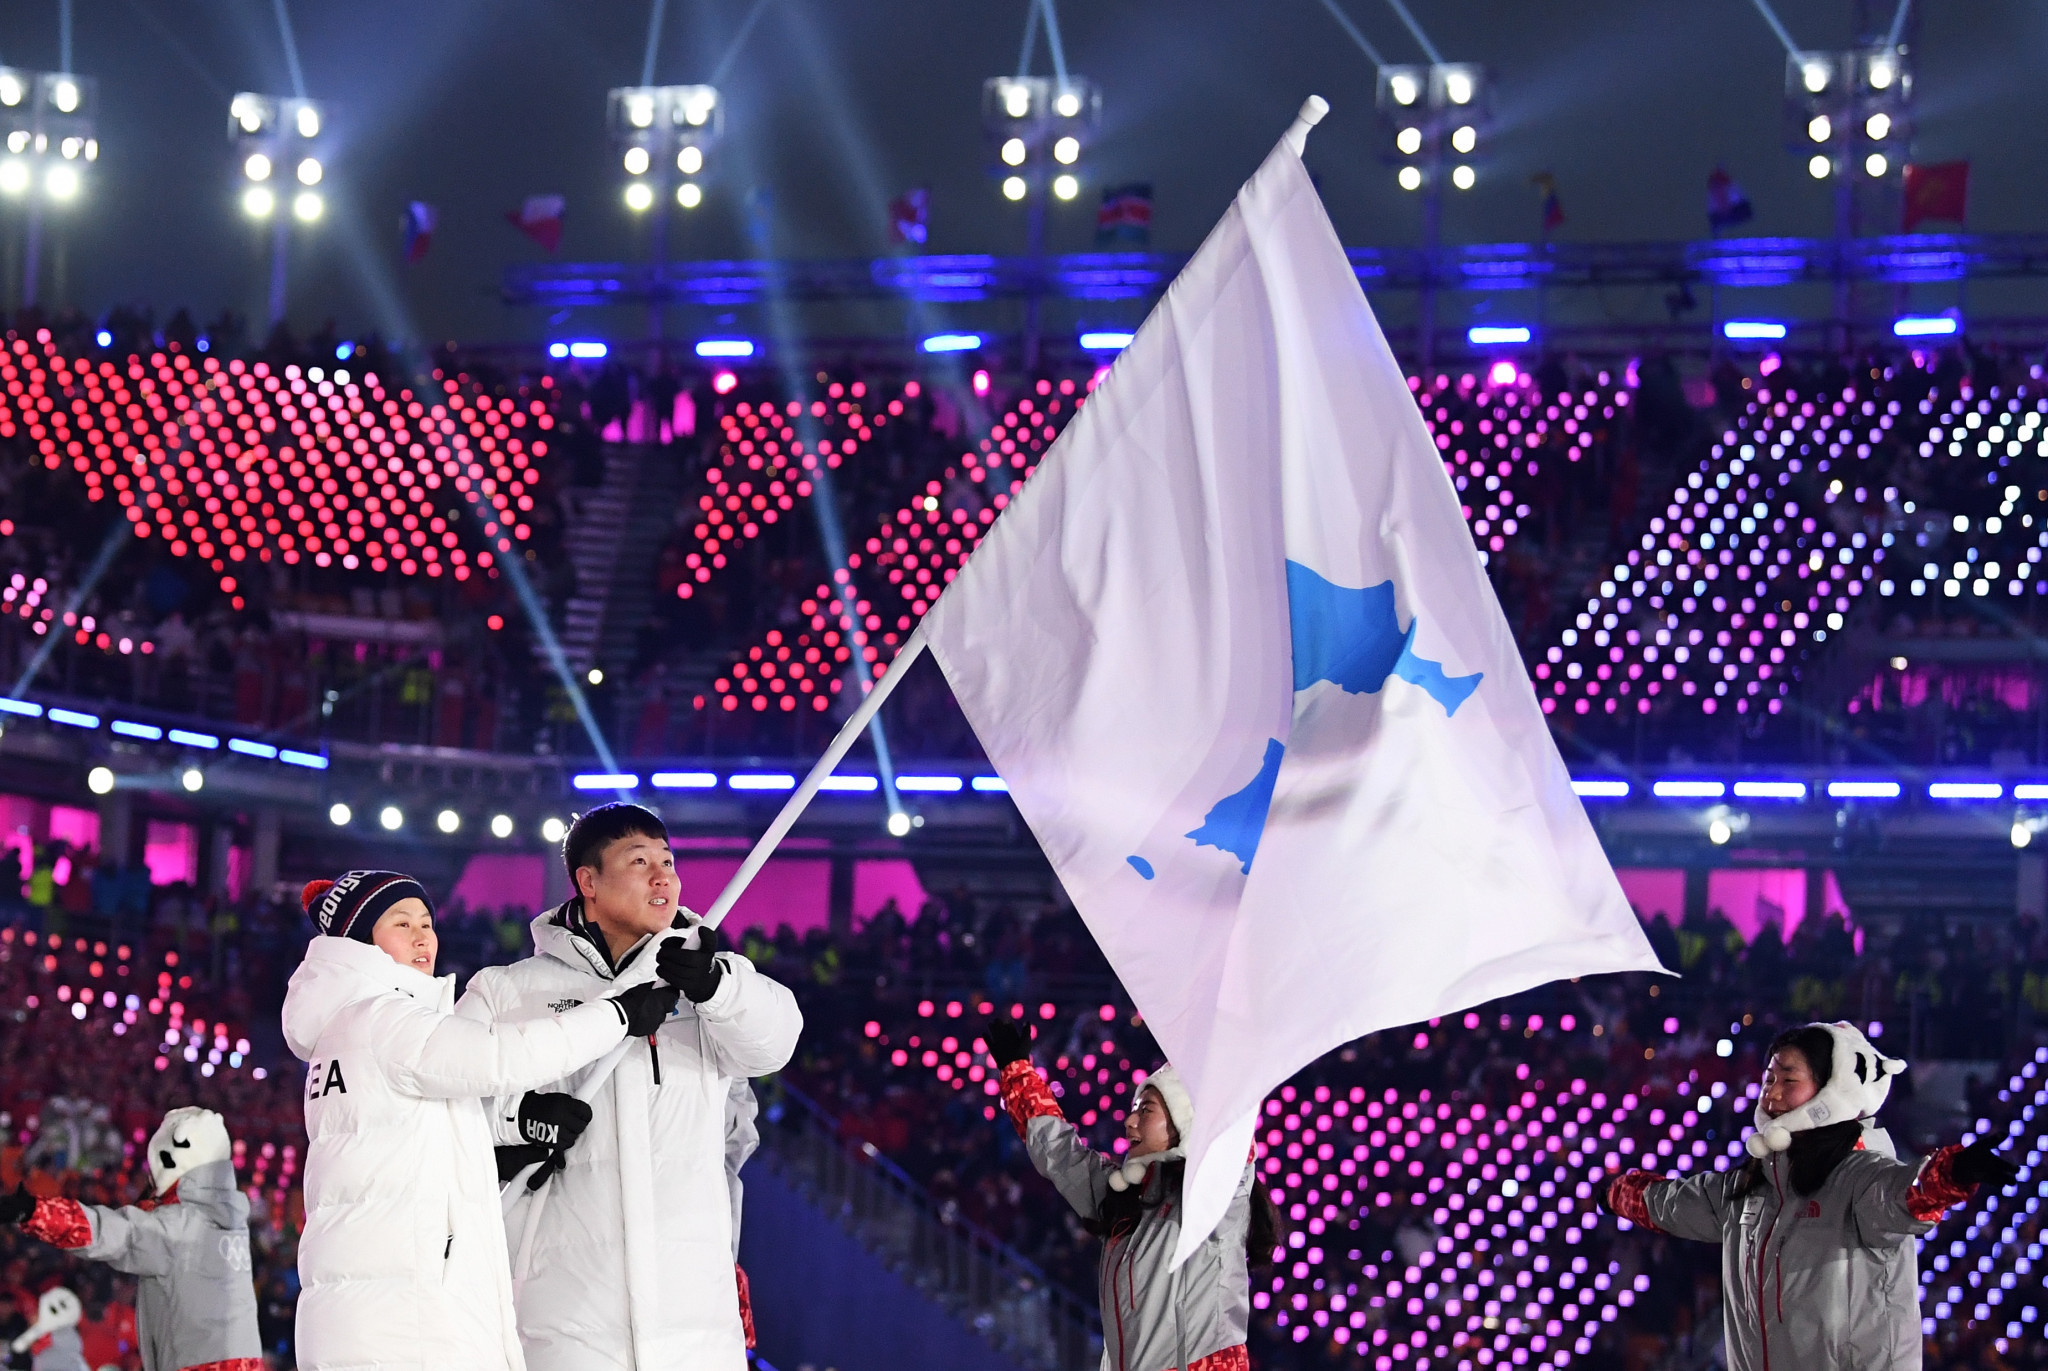 Joint Korean relations took a big step forward at Pyeongchang 2018 ©Getty Images